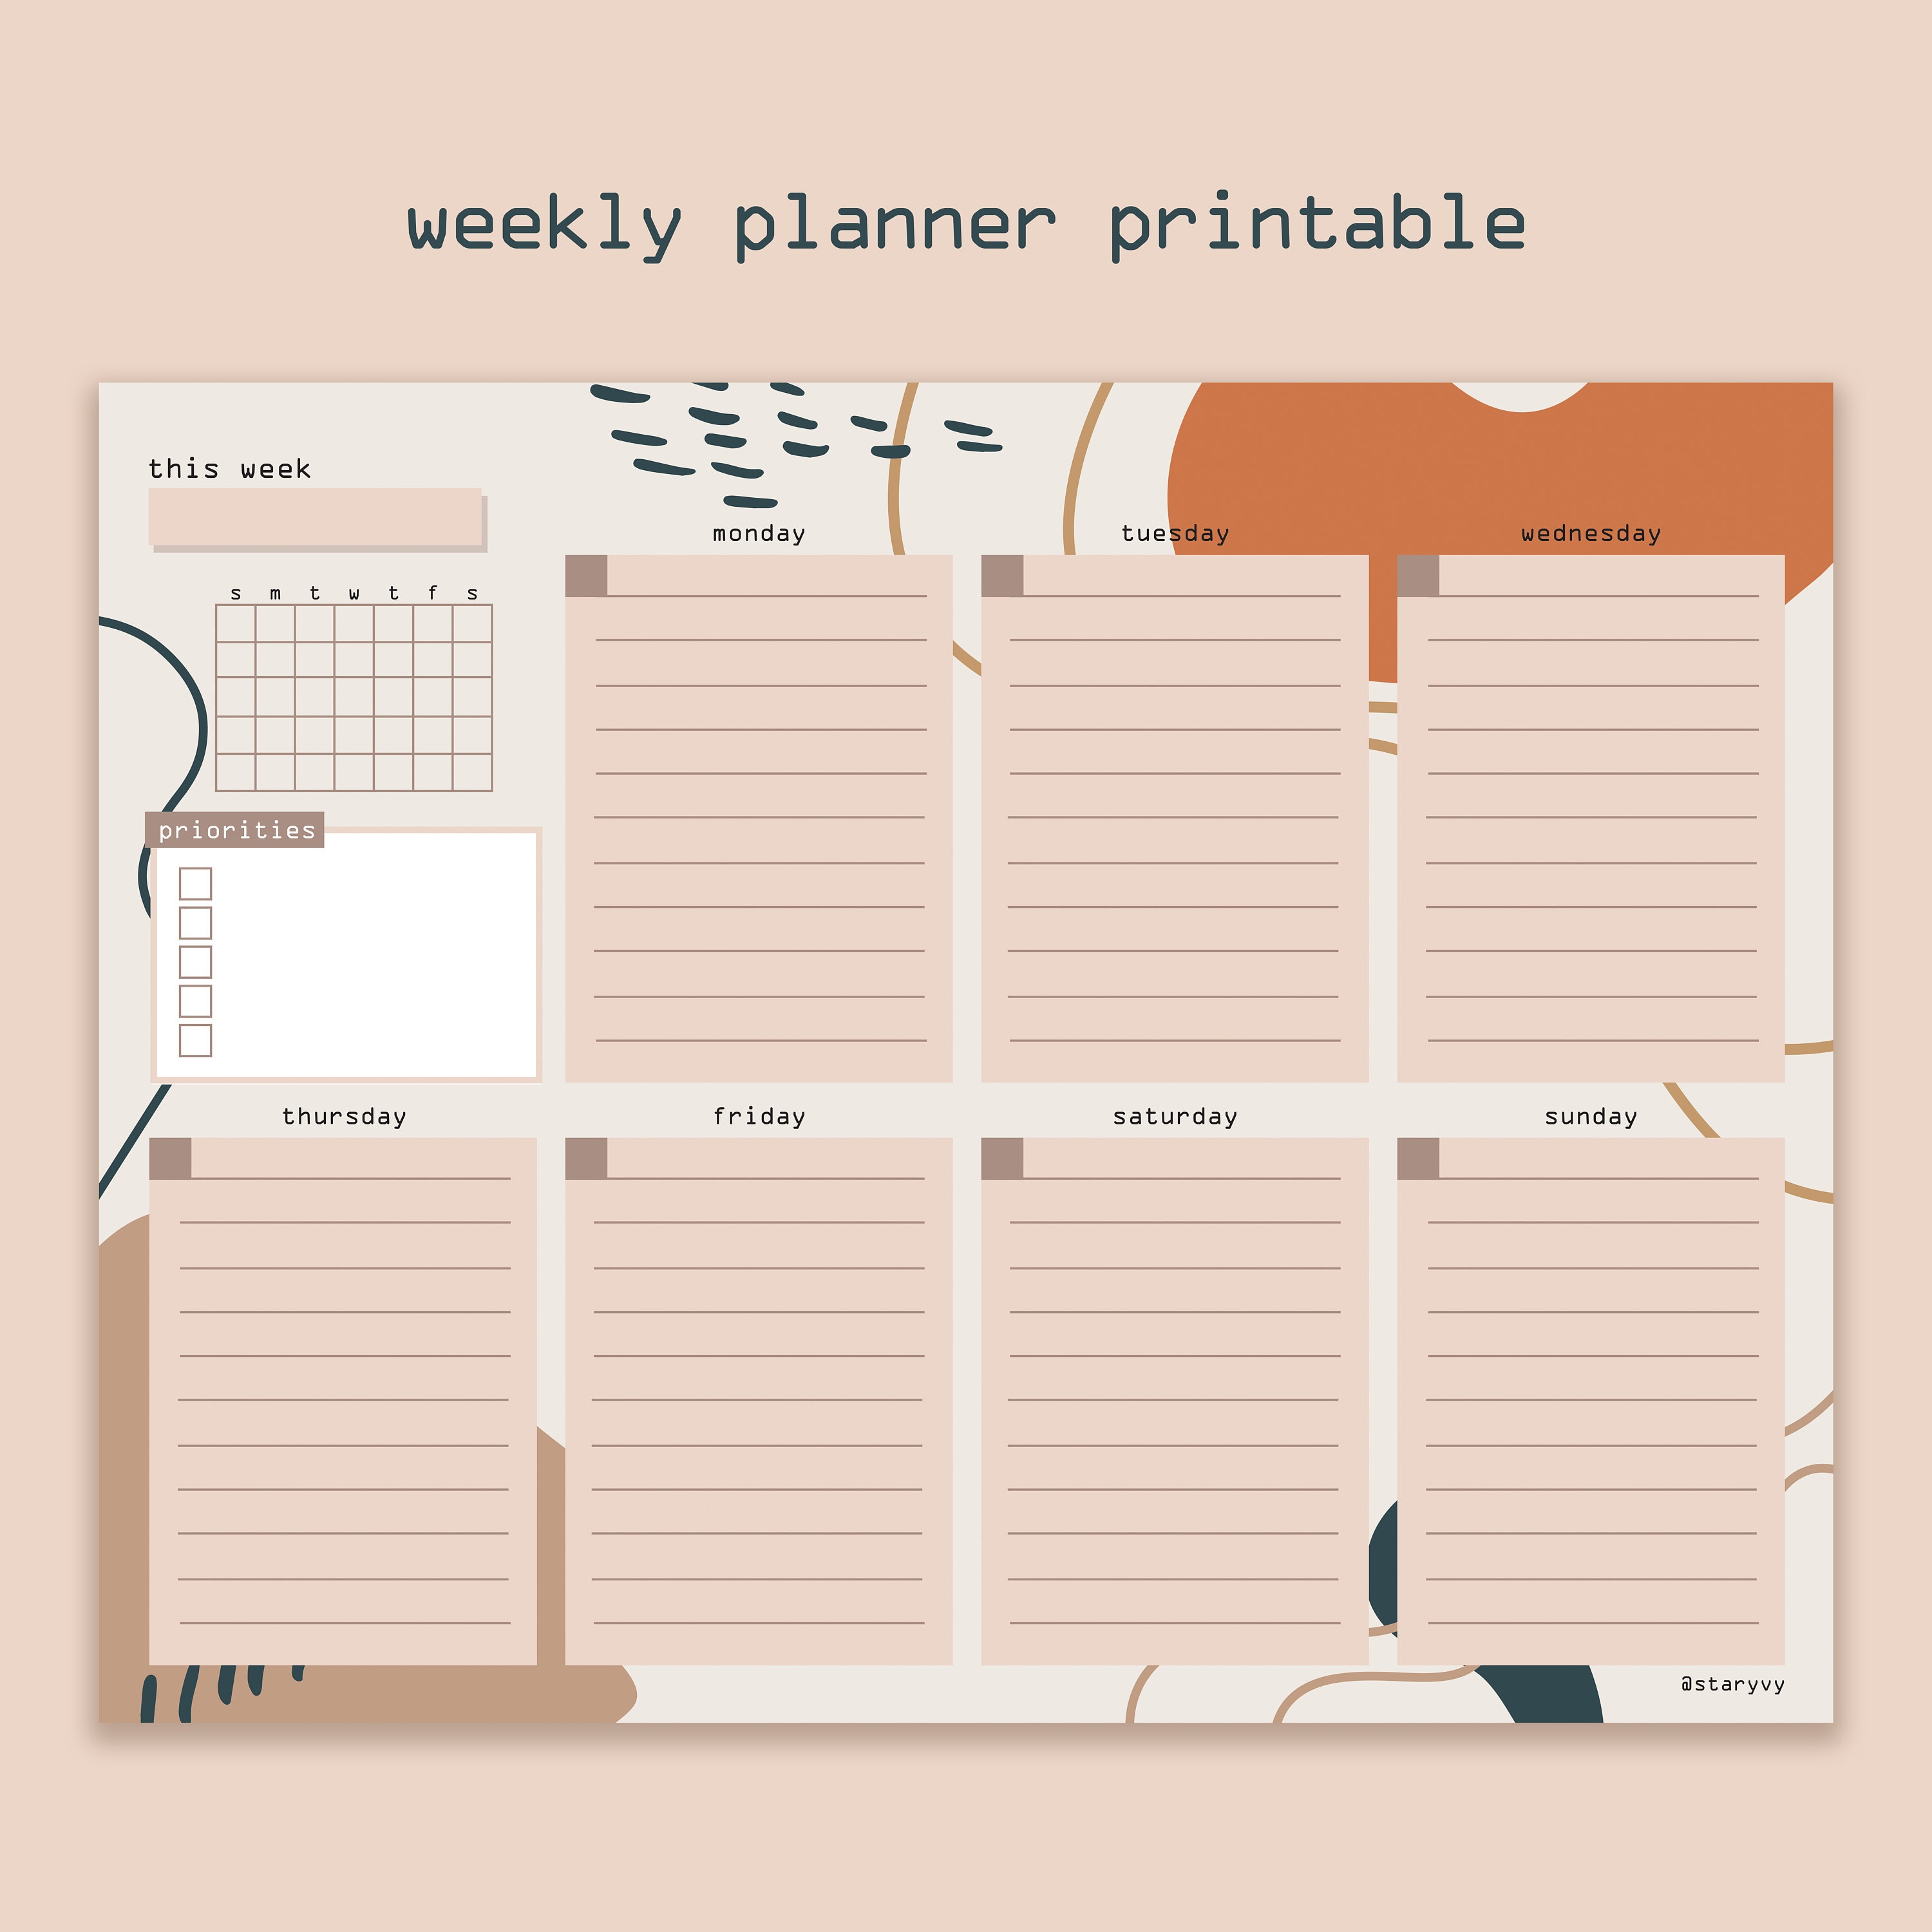 PACKLIST Planning Semaine + Mensuel - Planificateur Hebdomadaire